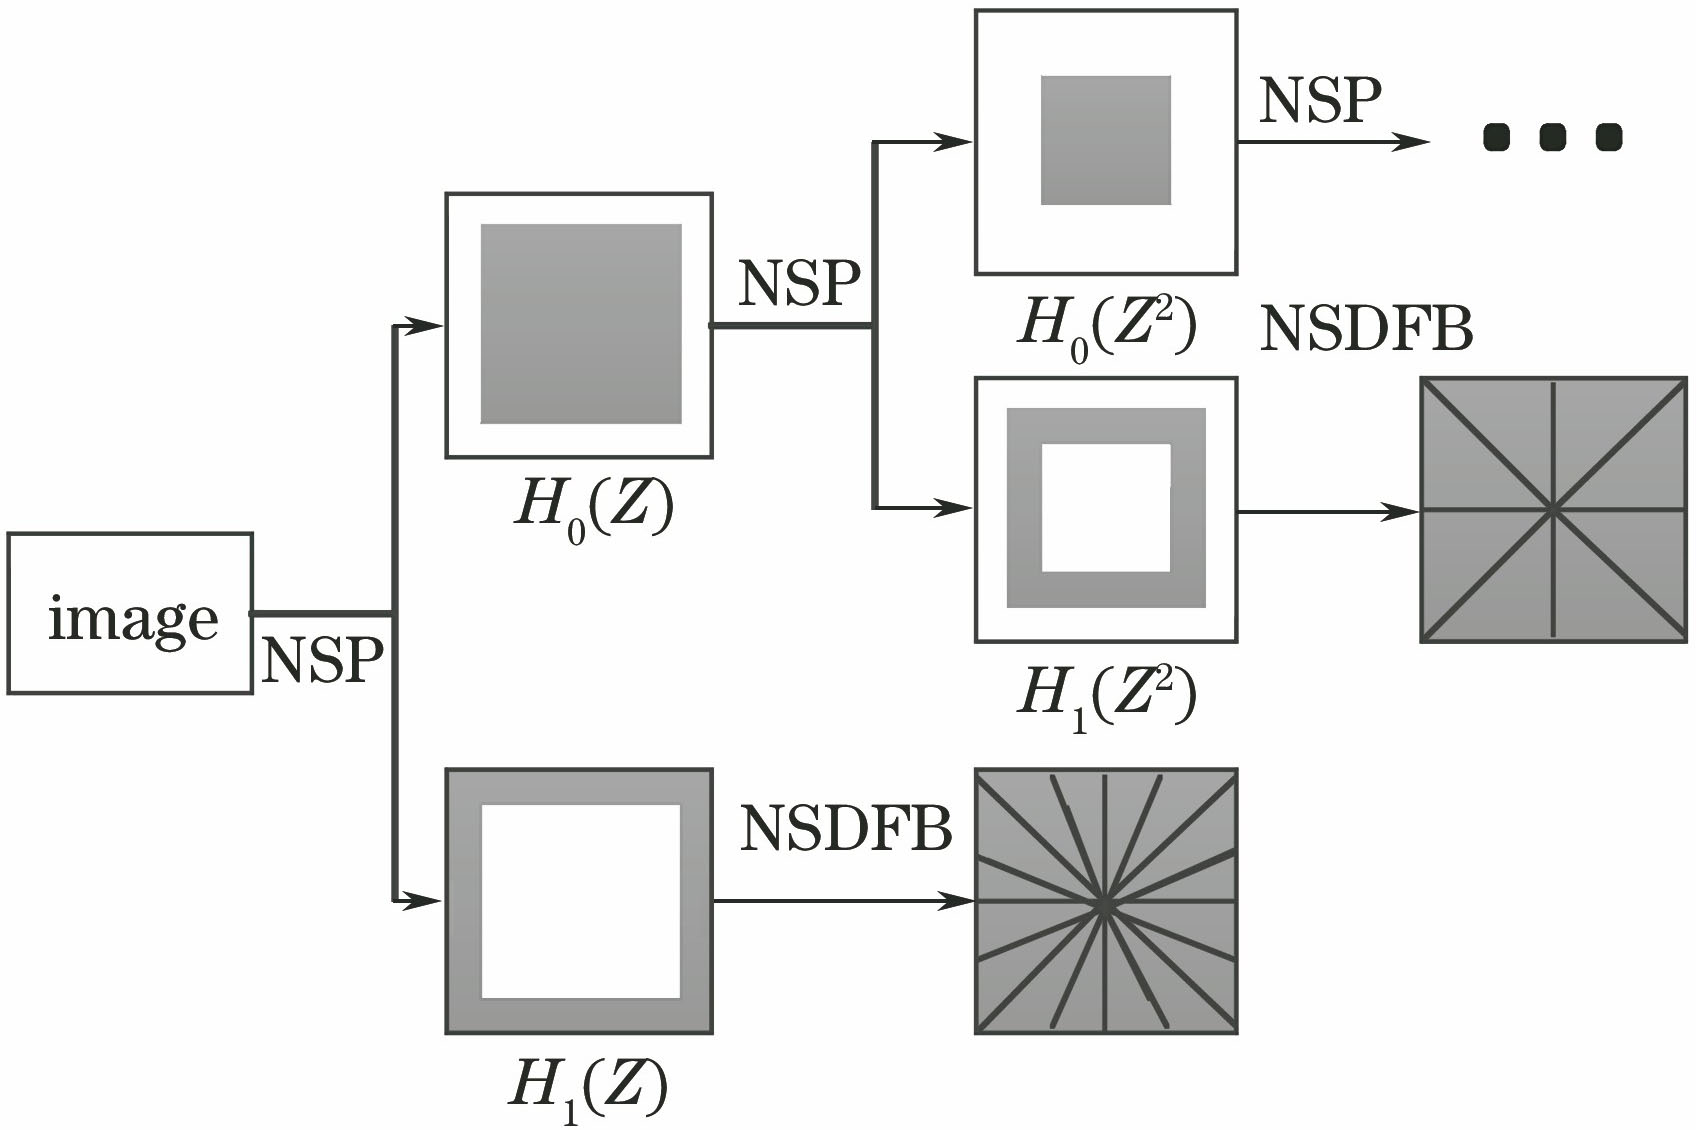 Non-subsampling filter model